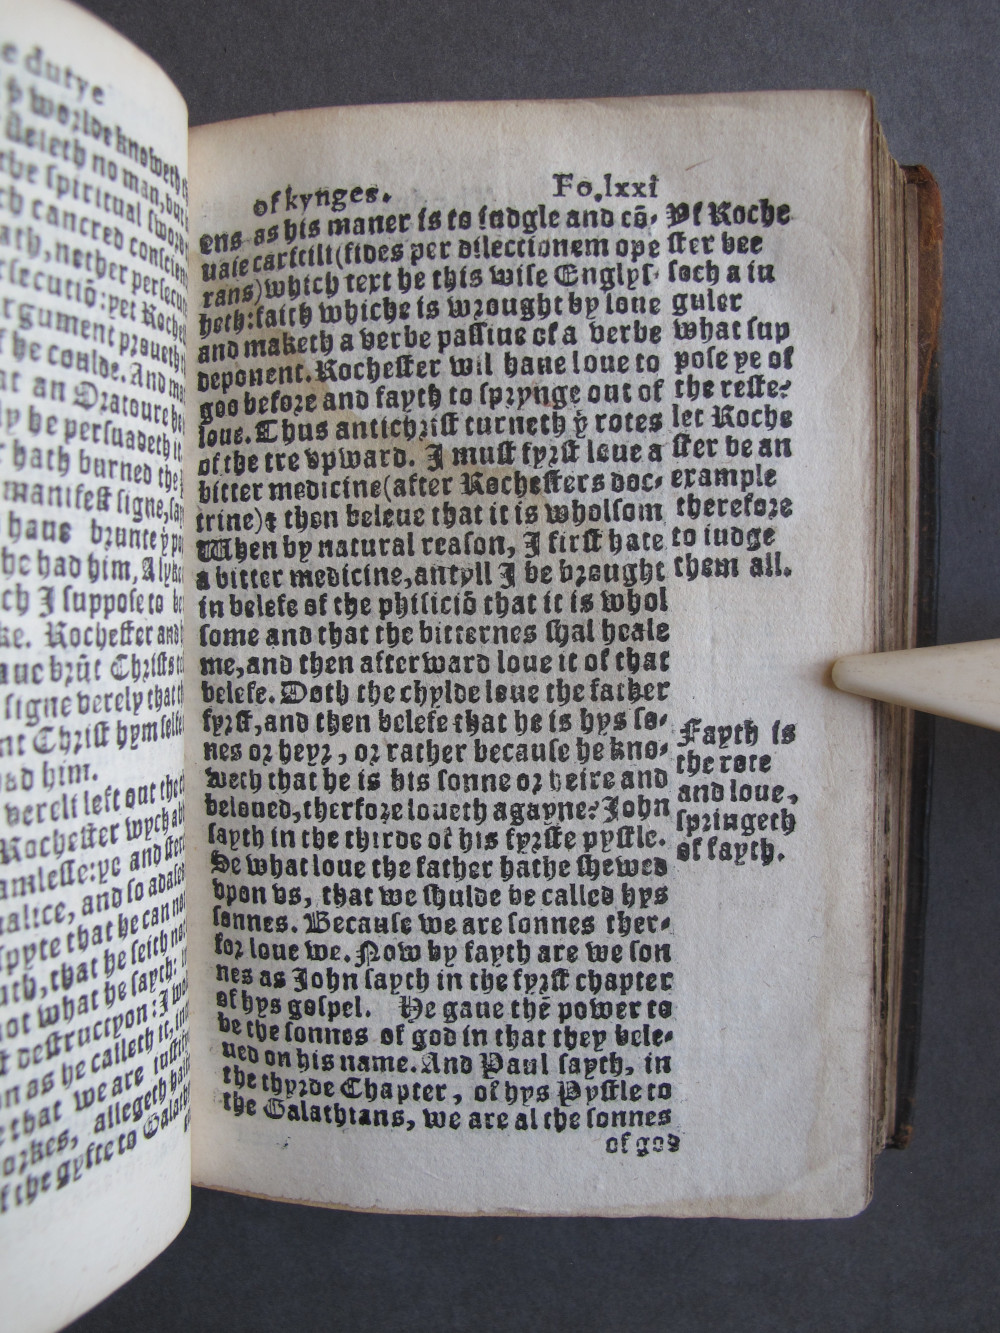 1 Folio I7 recto